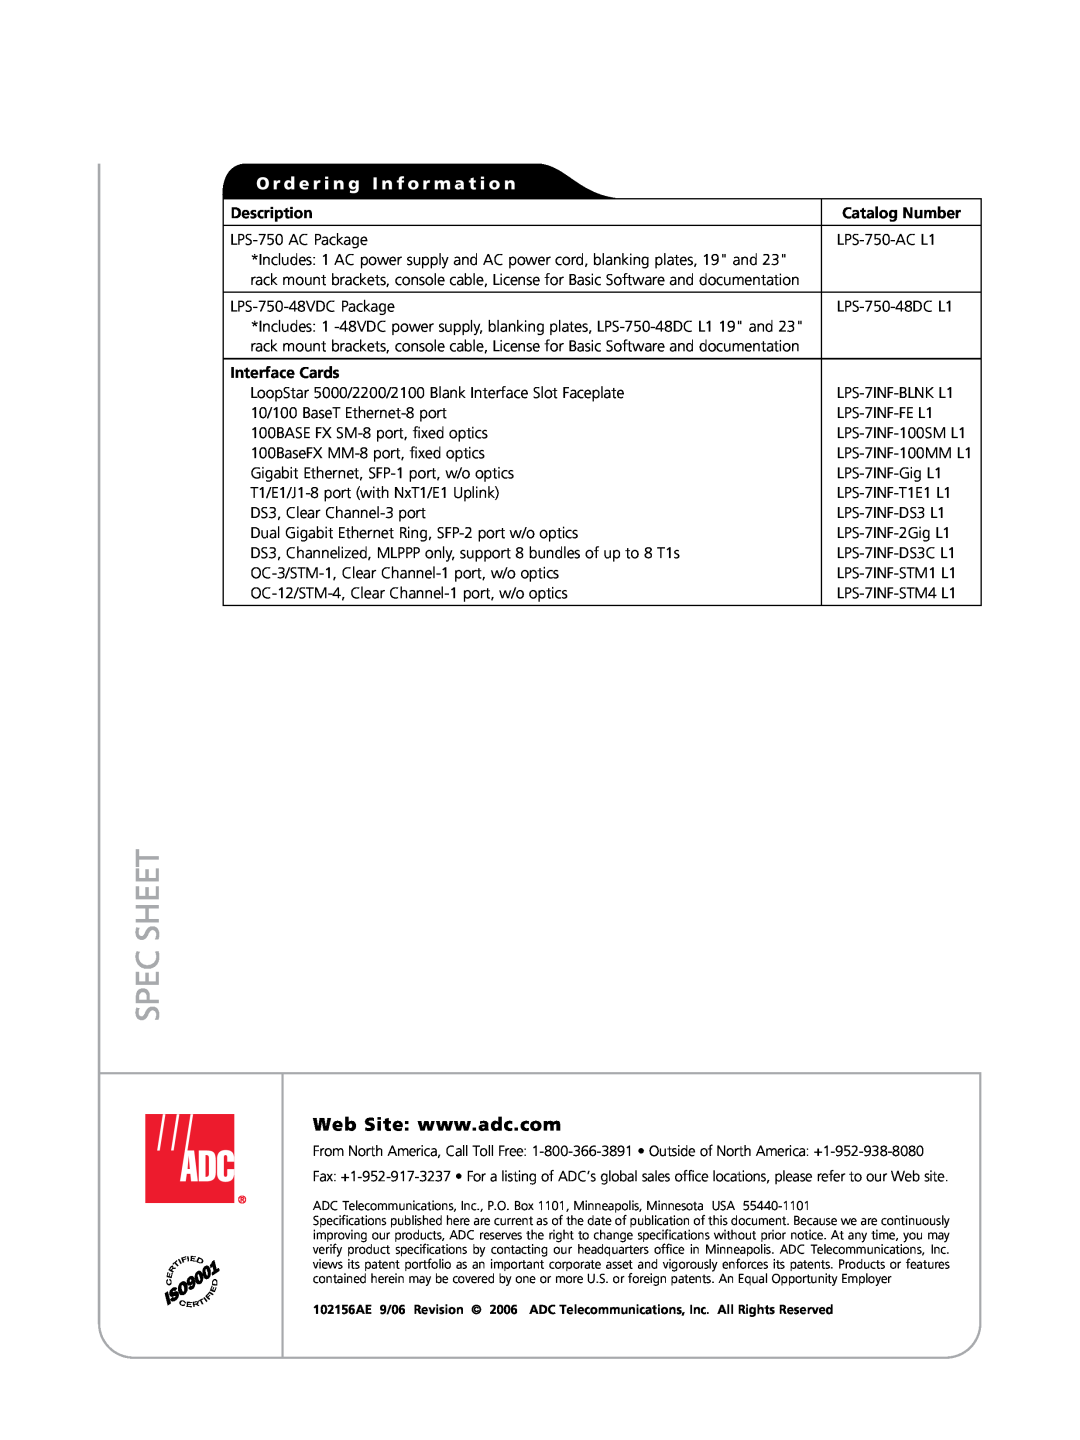 ADC 750 manual Spec Sheet, O r d e r i n g I n f o r m a t i o n, Description, Catalog Number, Interface Cards 